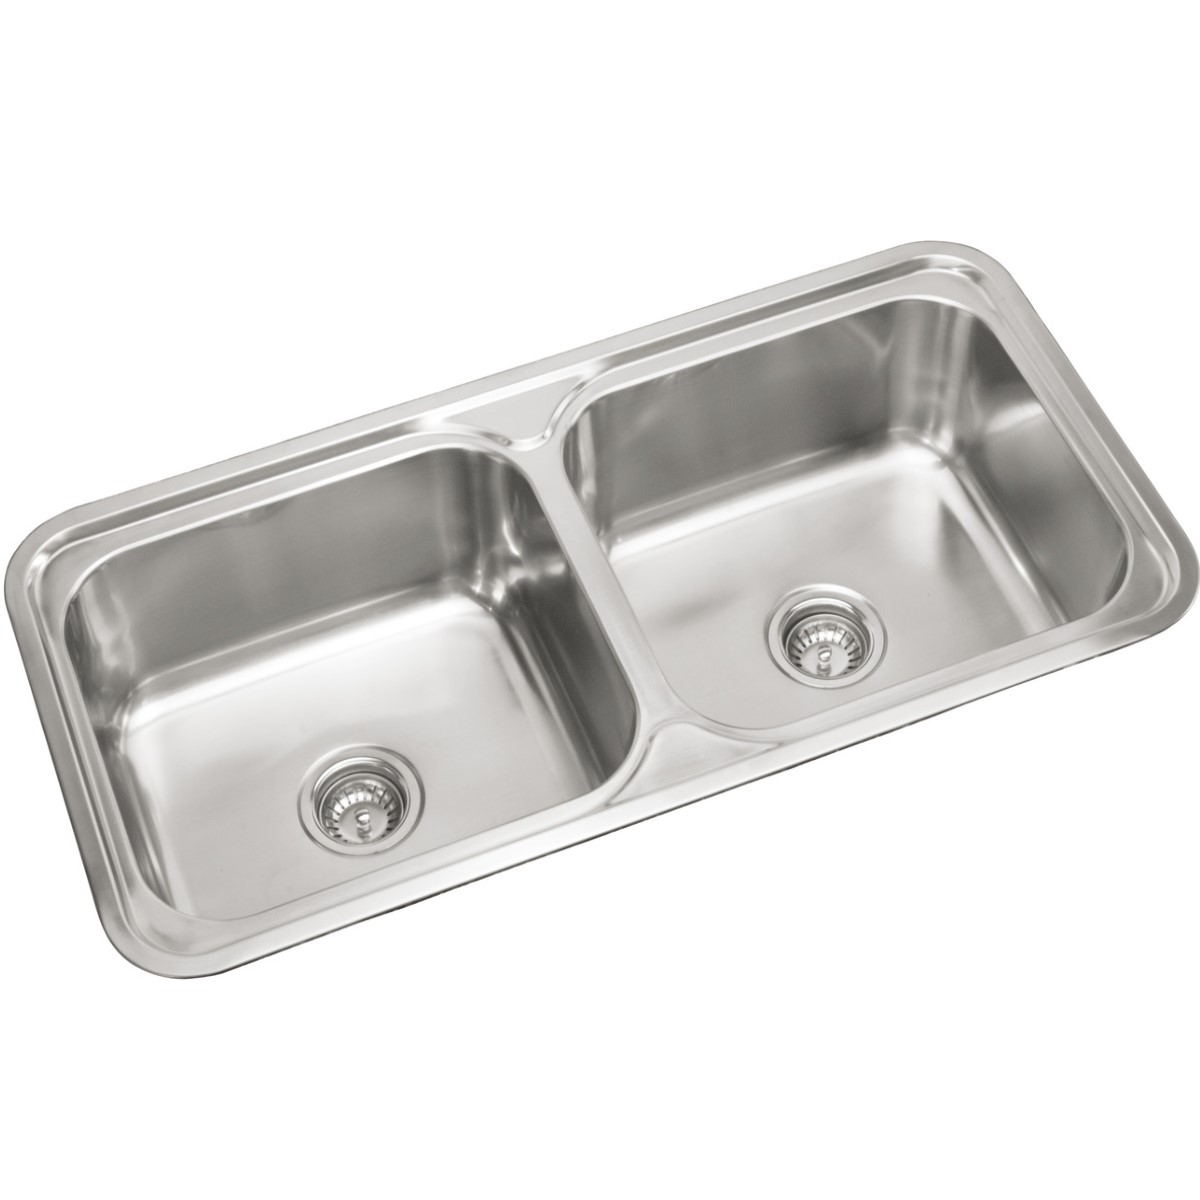 Hafele Splash CORAL  Double Bowl Sink   - 49539358